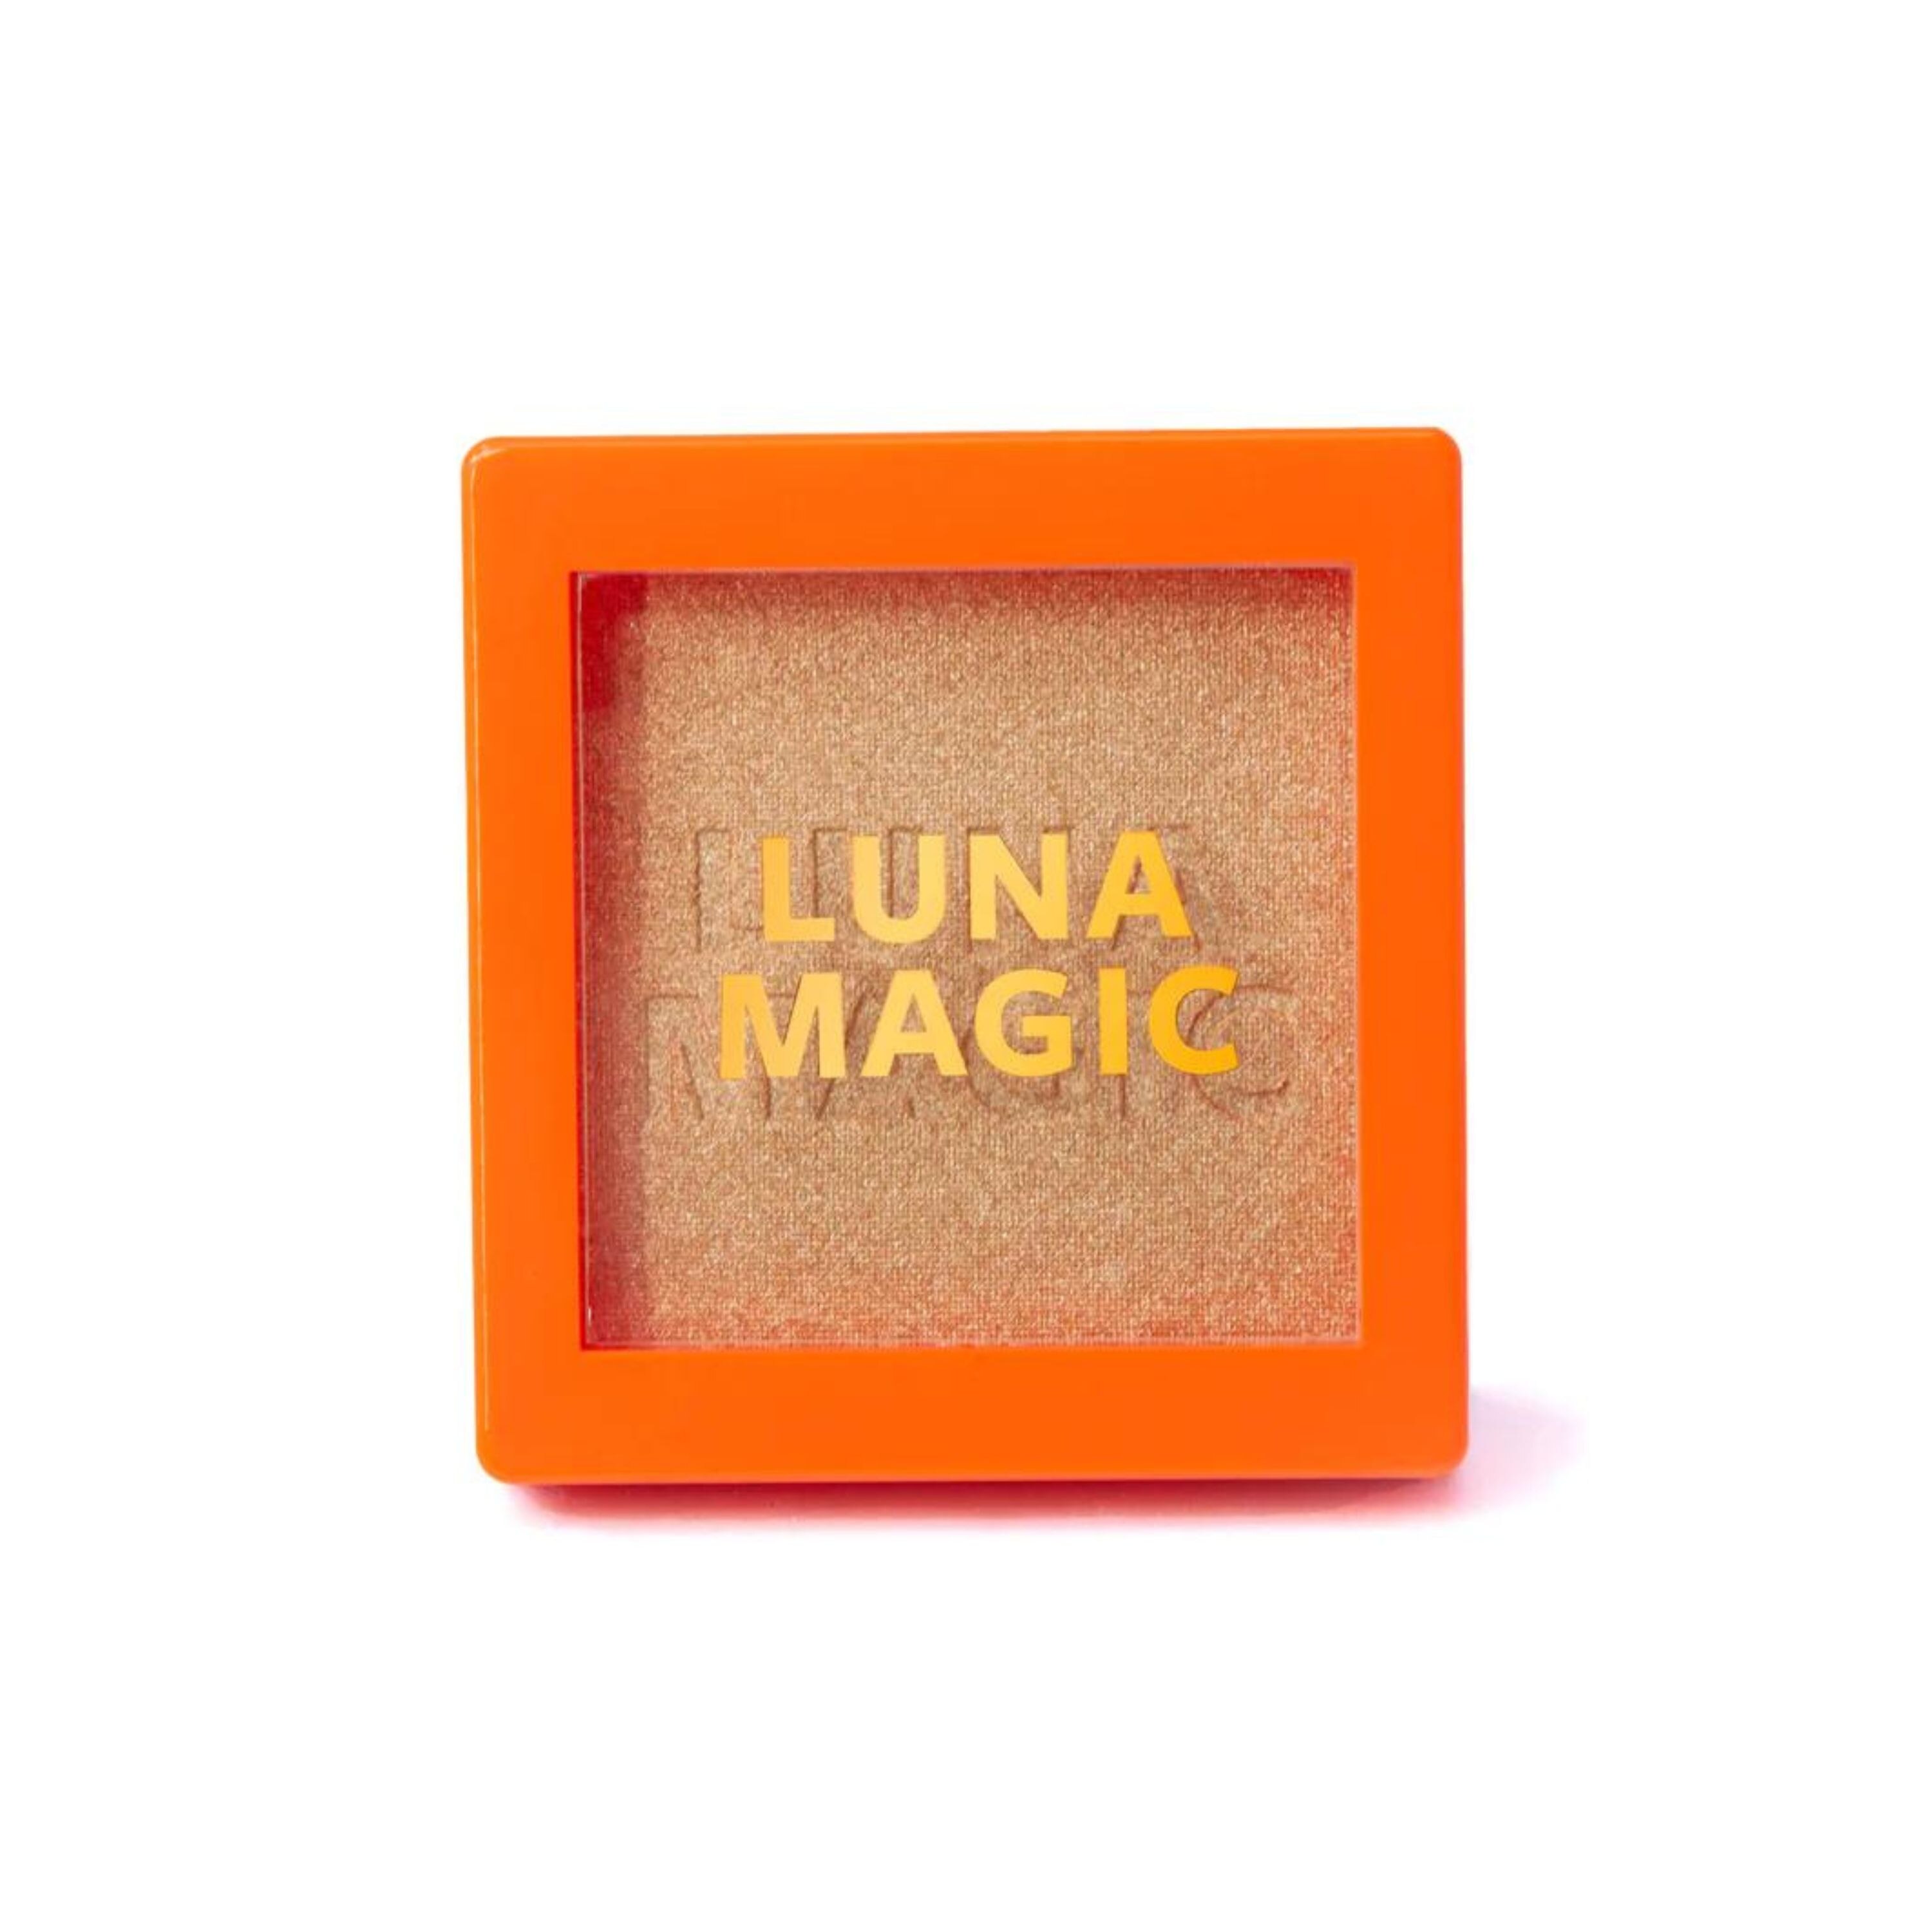 Luna Magic Highlighter